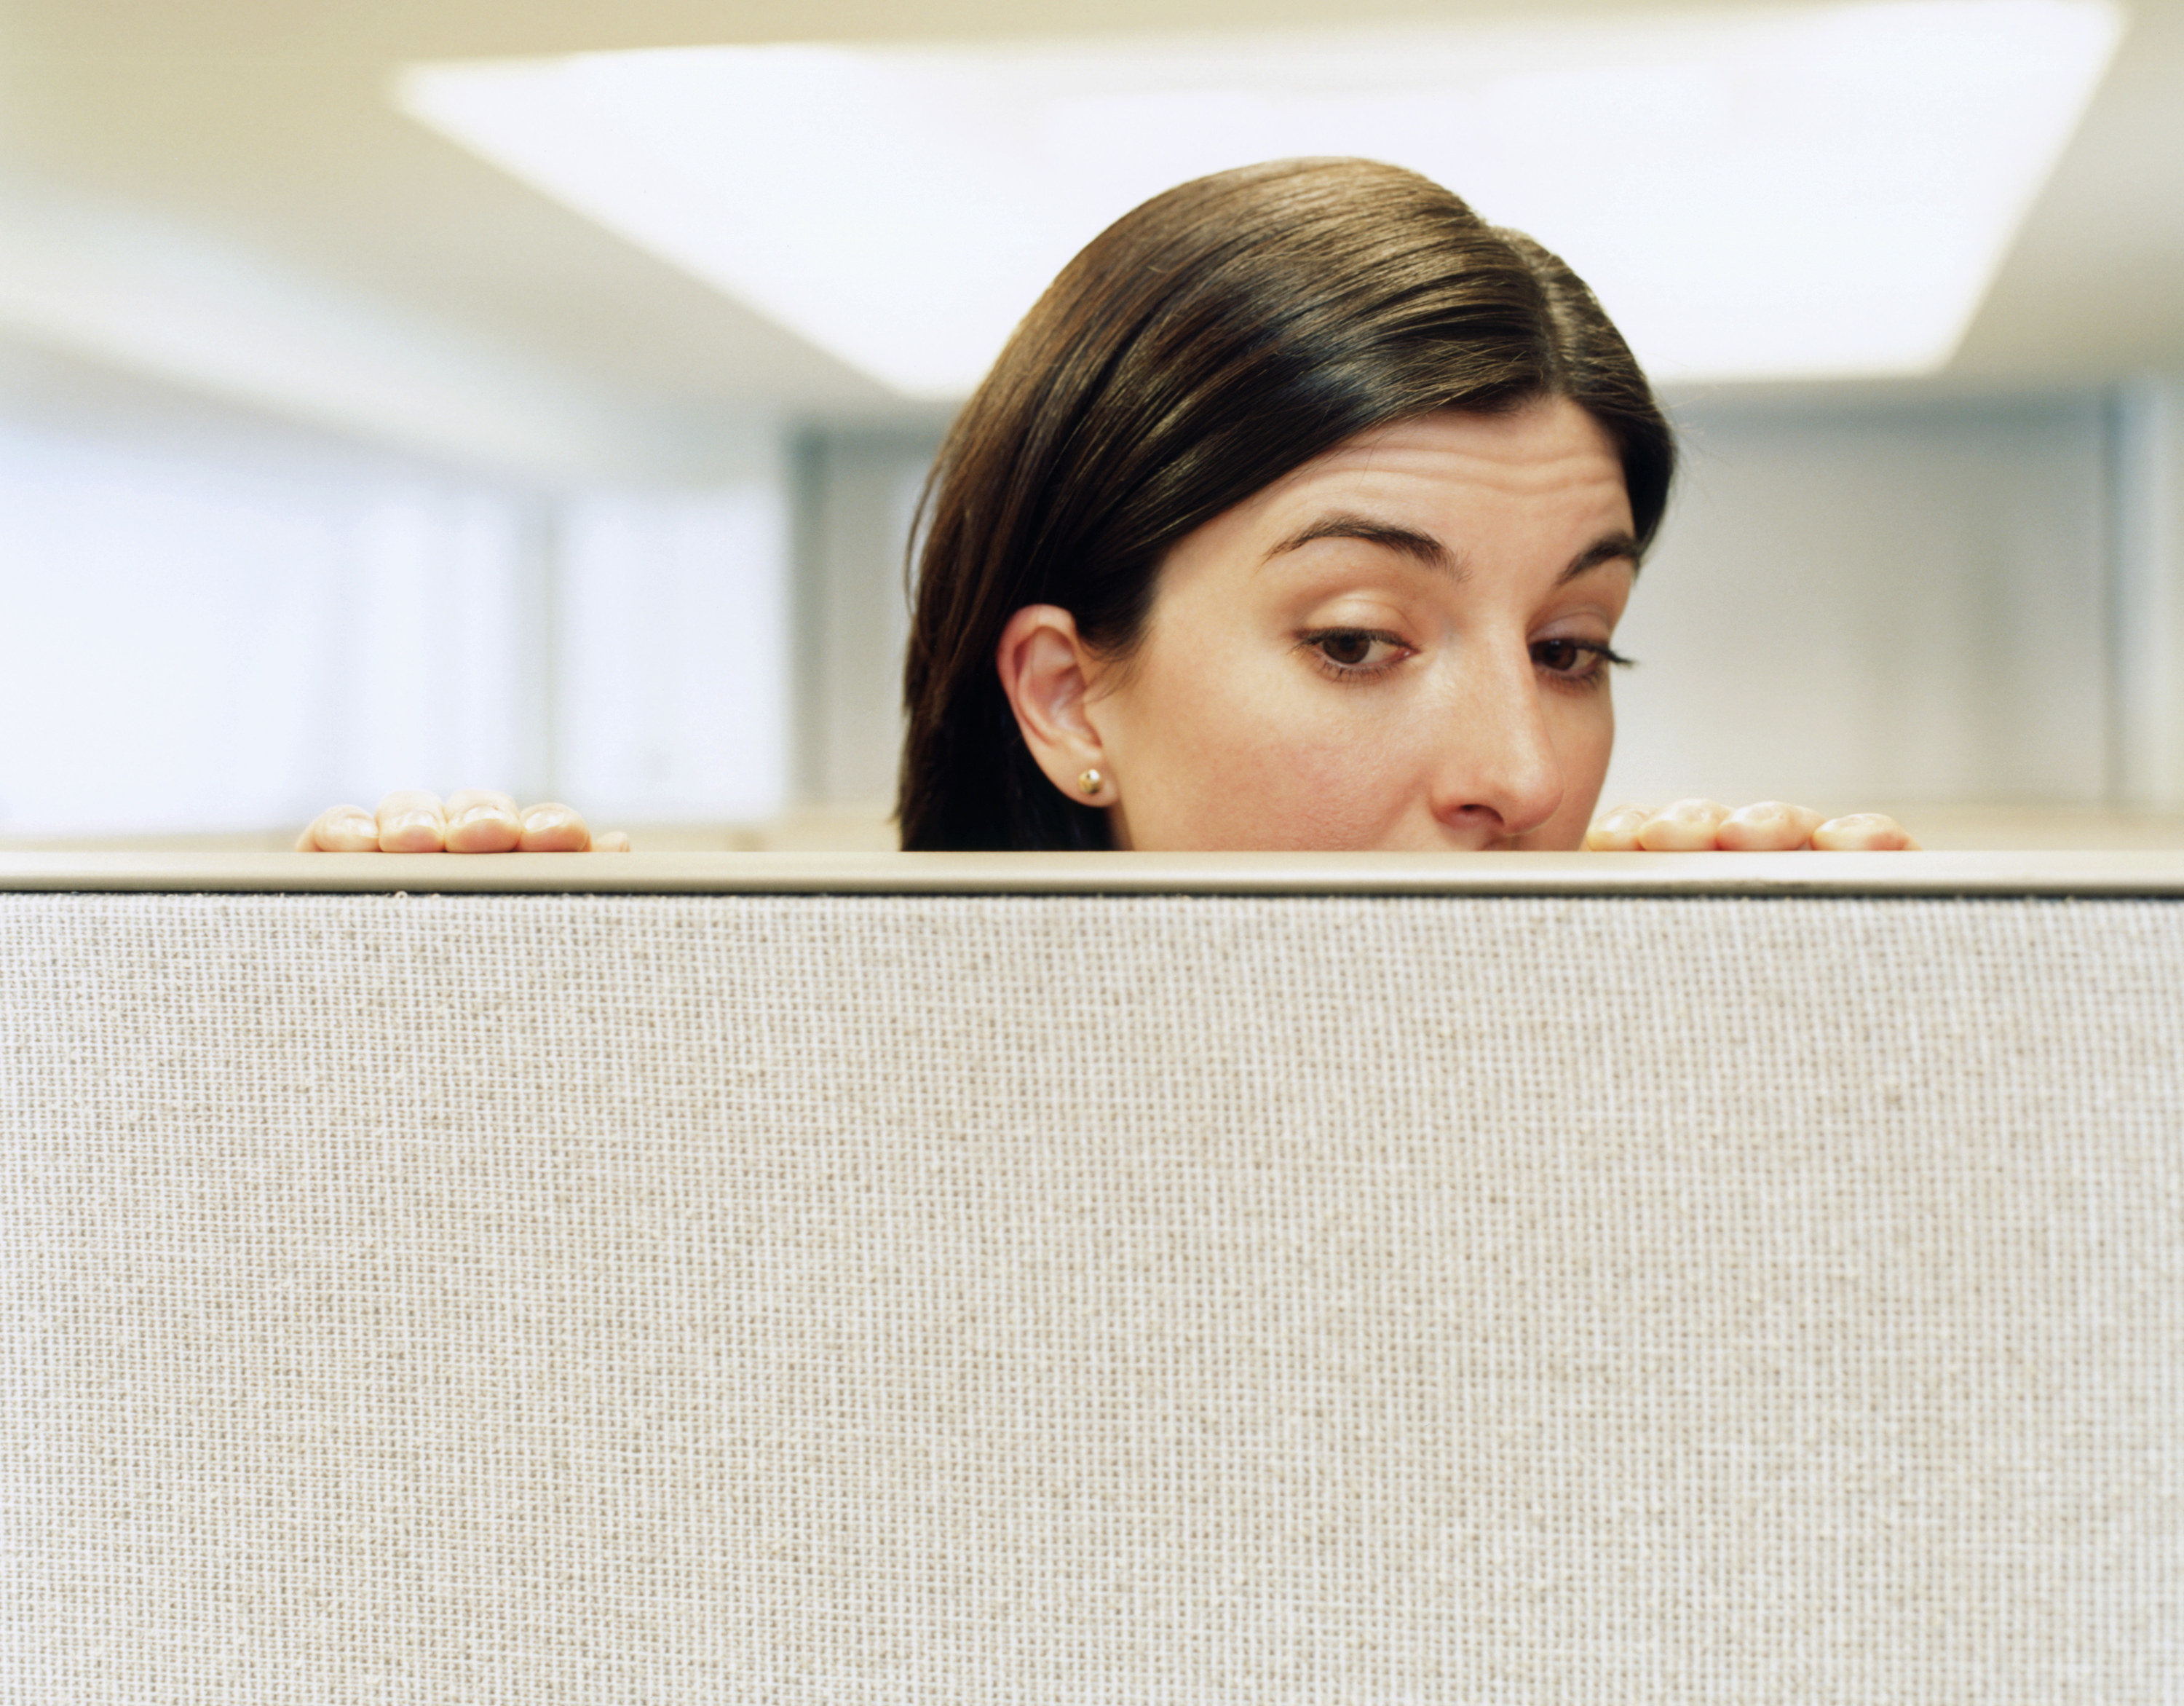 A woman peeking over a cubicle wall